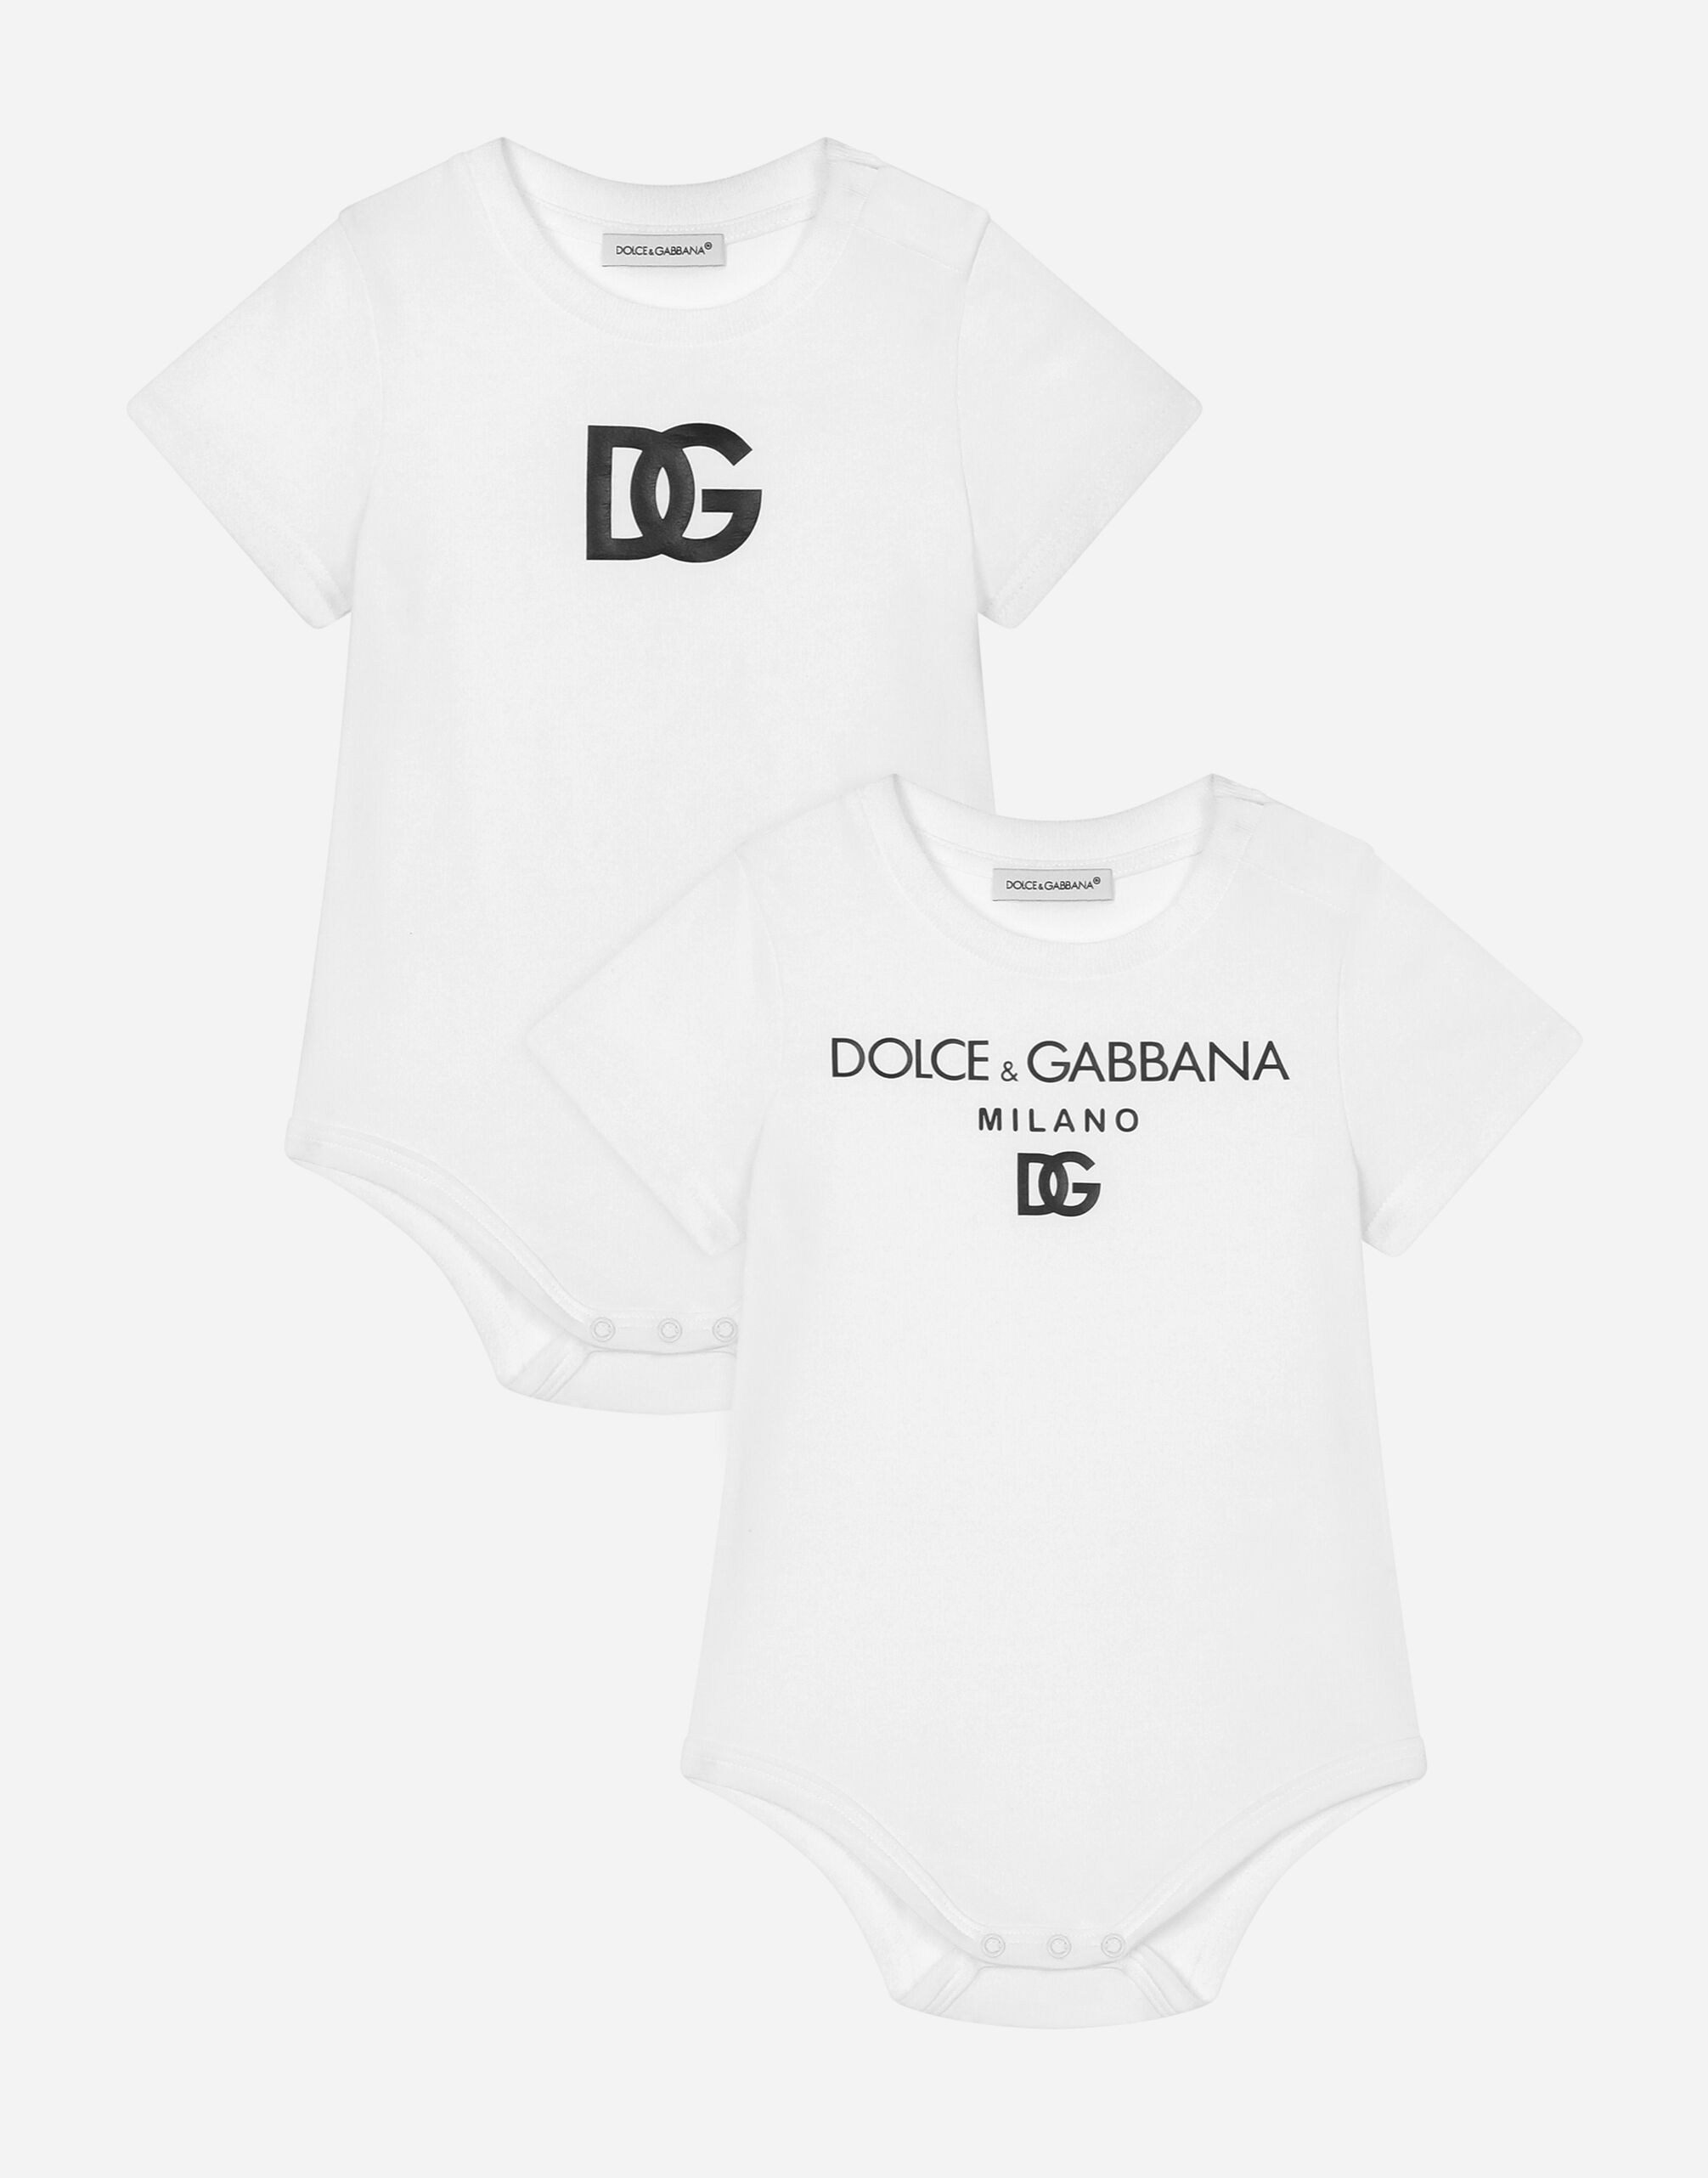 DolceGabbanaSpa 2-babygrow gift set in logo-print jersey Grey L1JO6LG7KS1